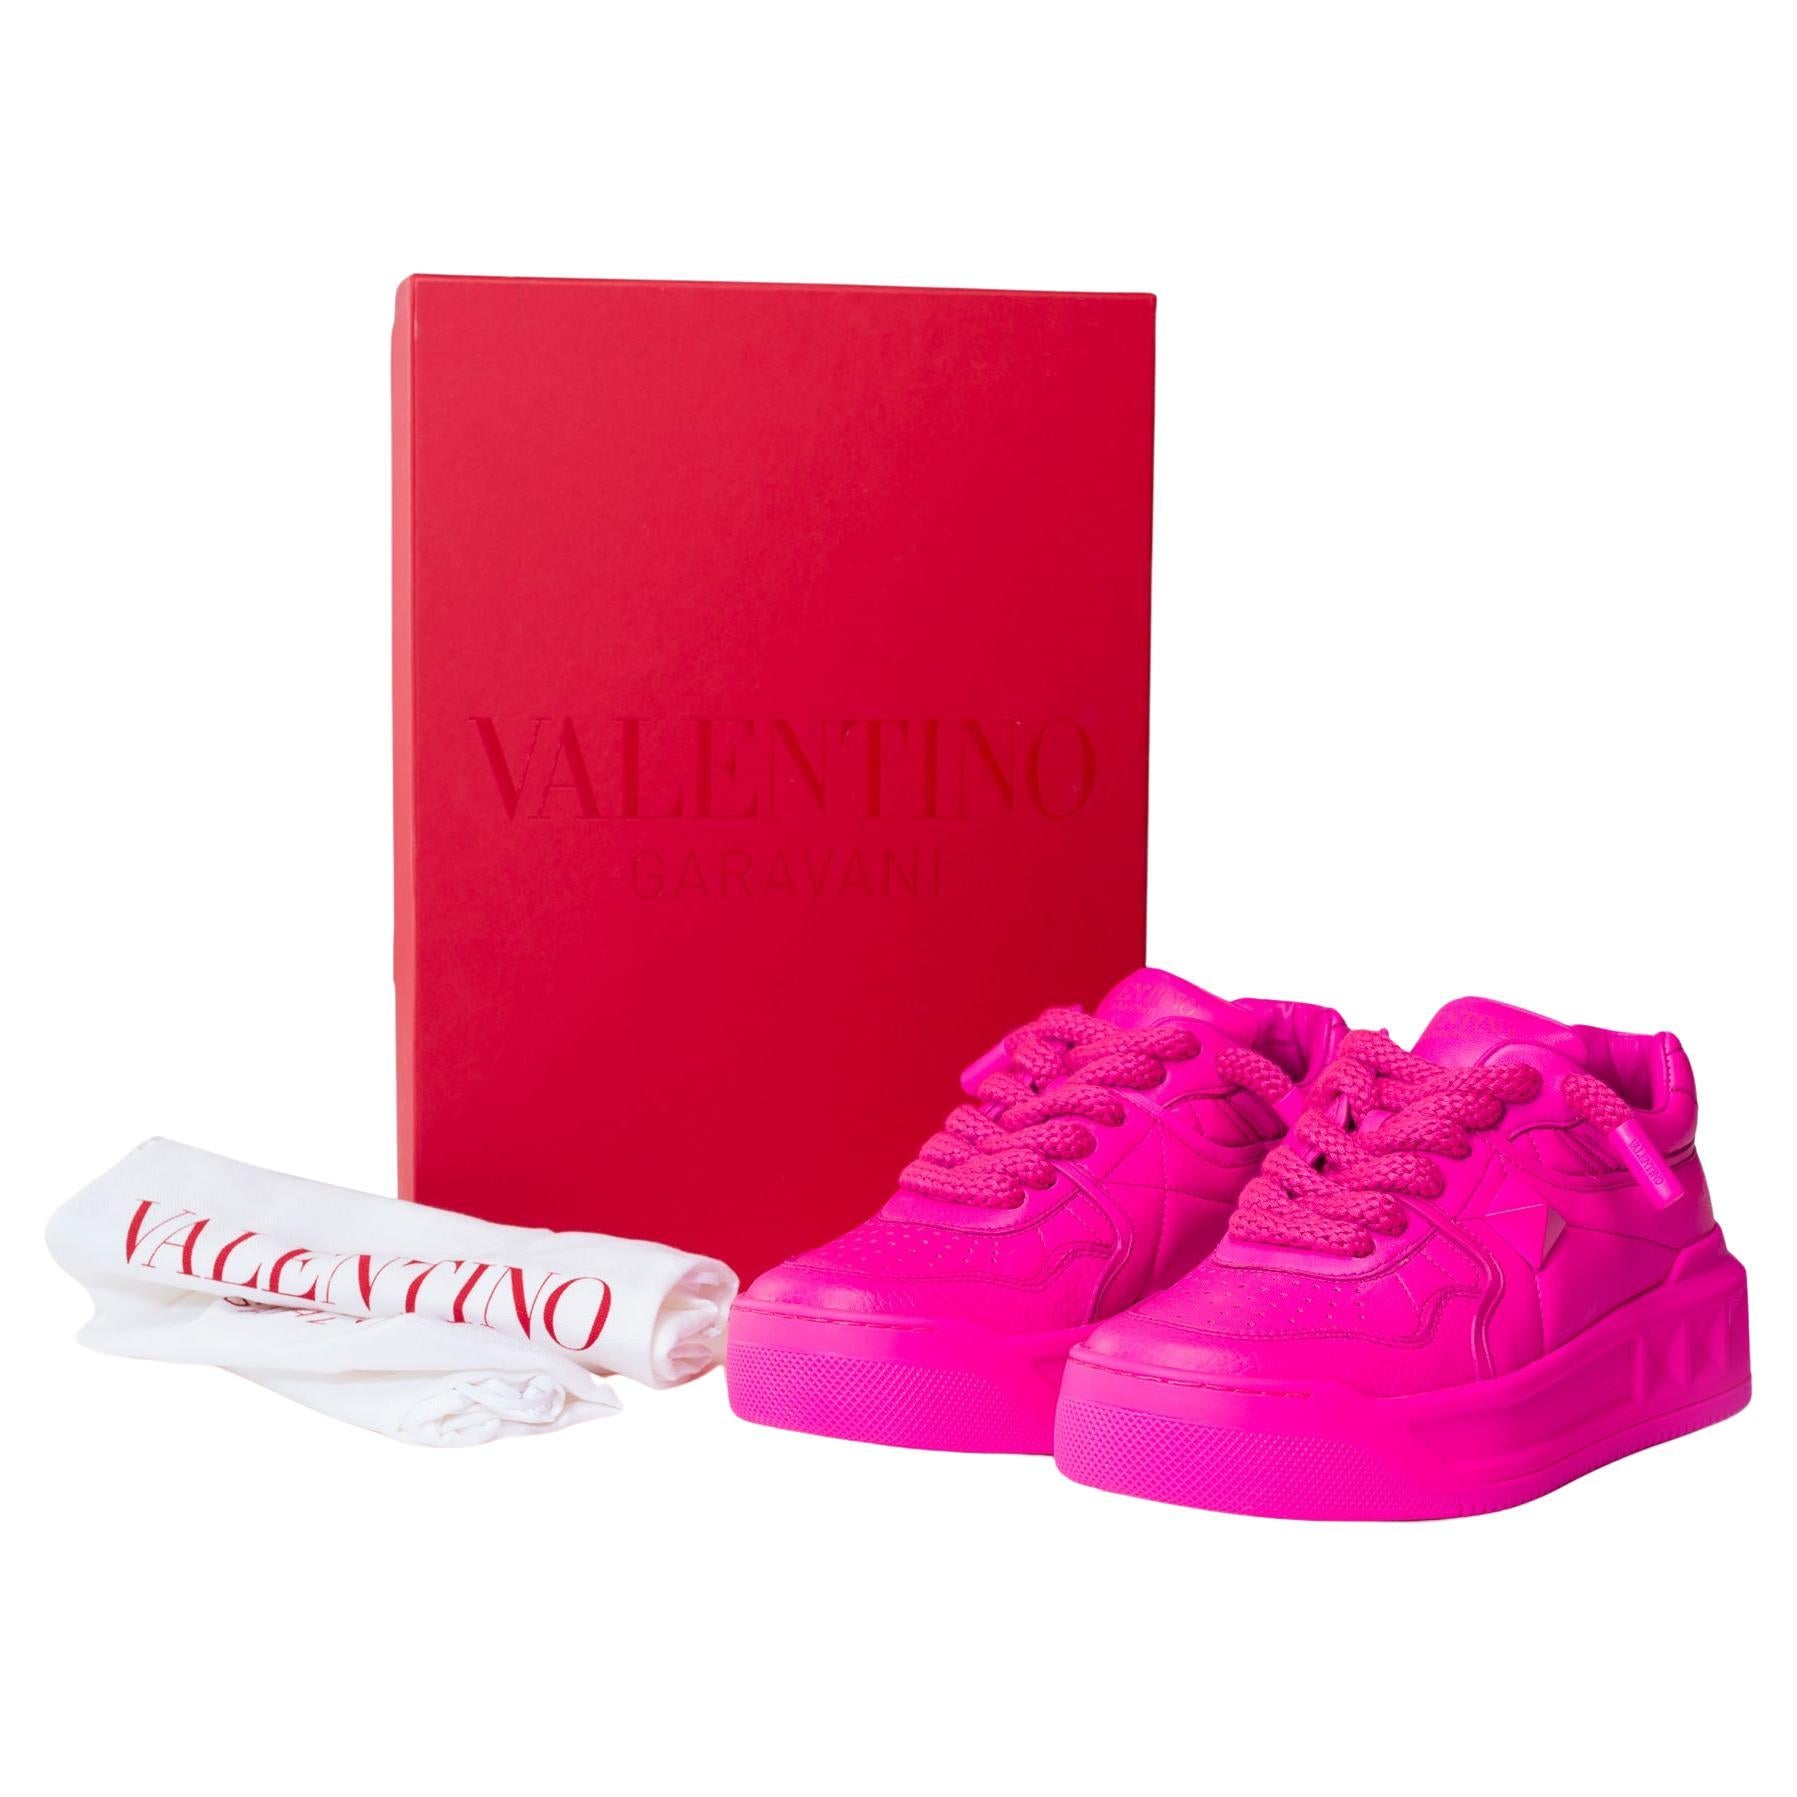 Baskets Valentino Garavani ONE STUD XL pour femmes en cuir rose, taille 39